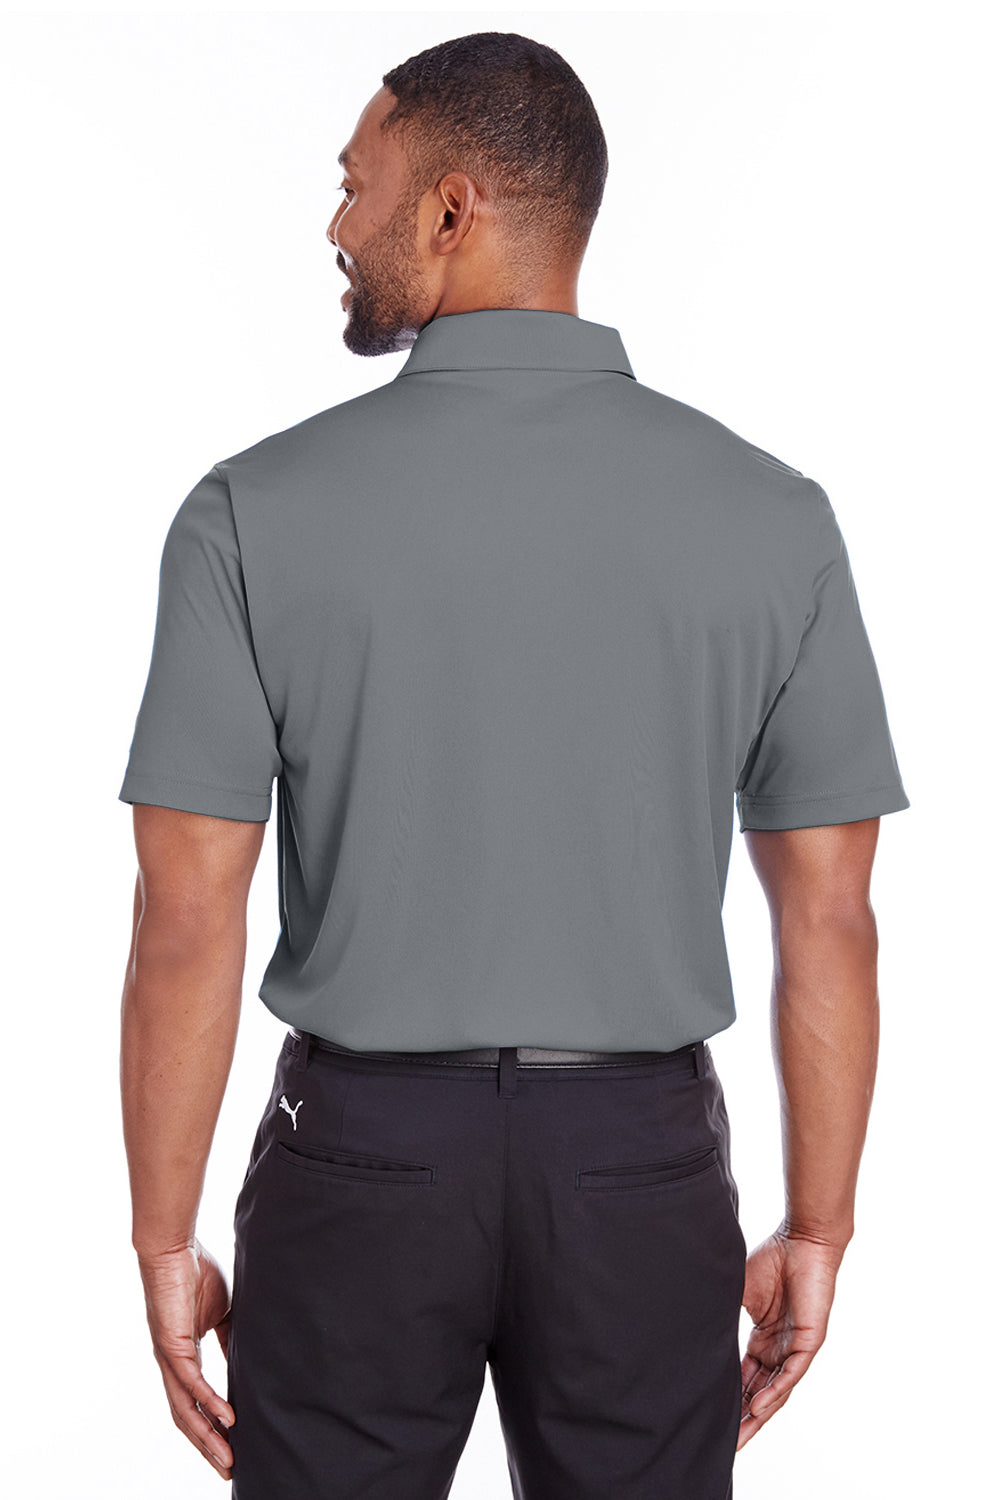 Puma 596799 Mens Icon Performance Moisture Wicking Short Sleeve Polo Shirt Grey Back